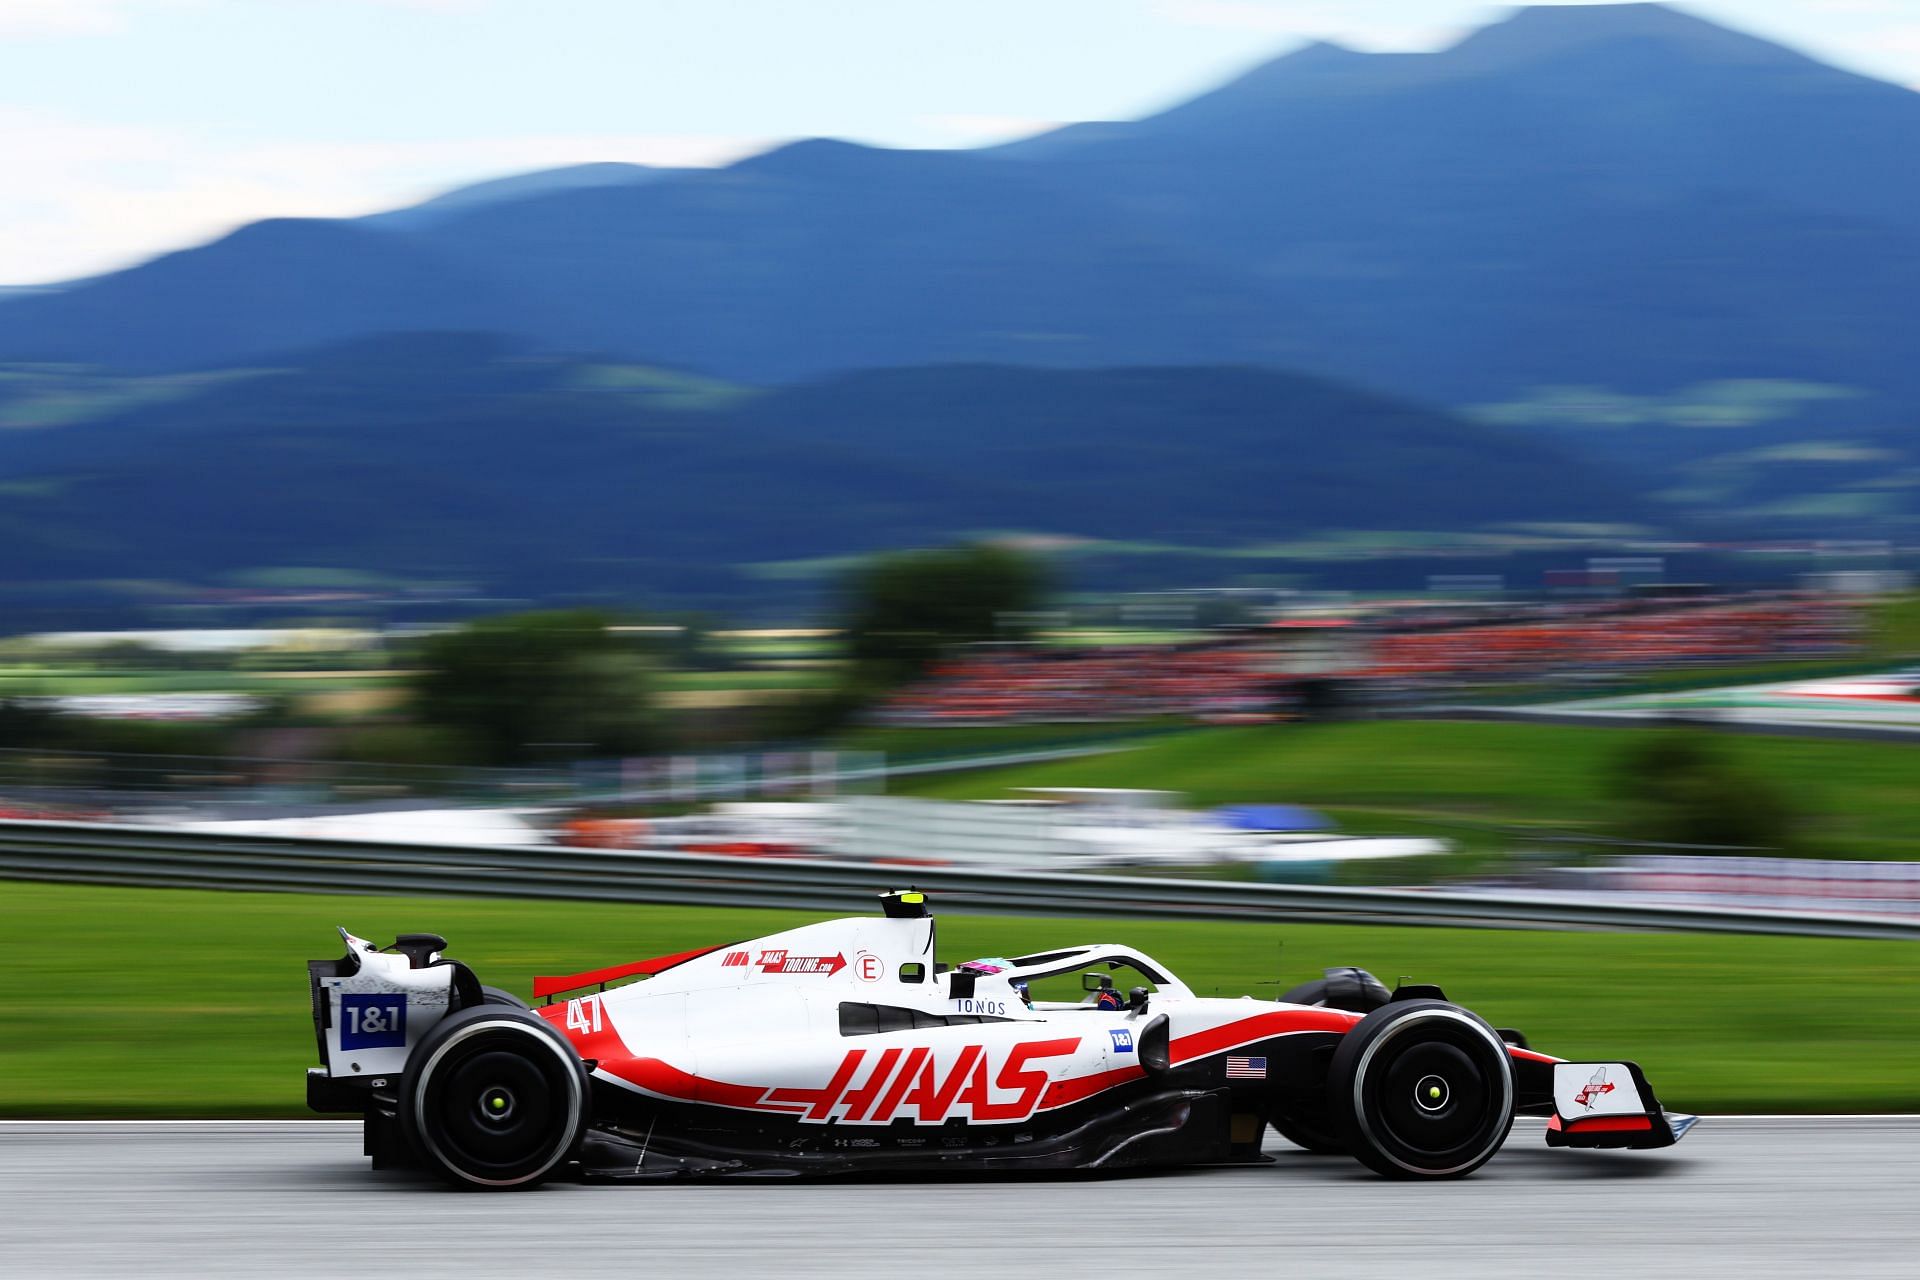 Mick Schumacher at the F1 Grand Prix of Austria